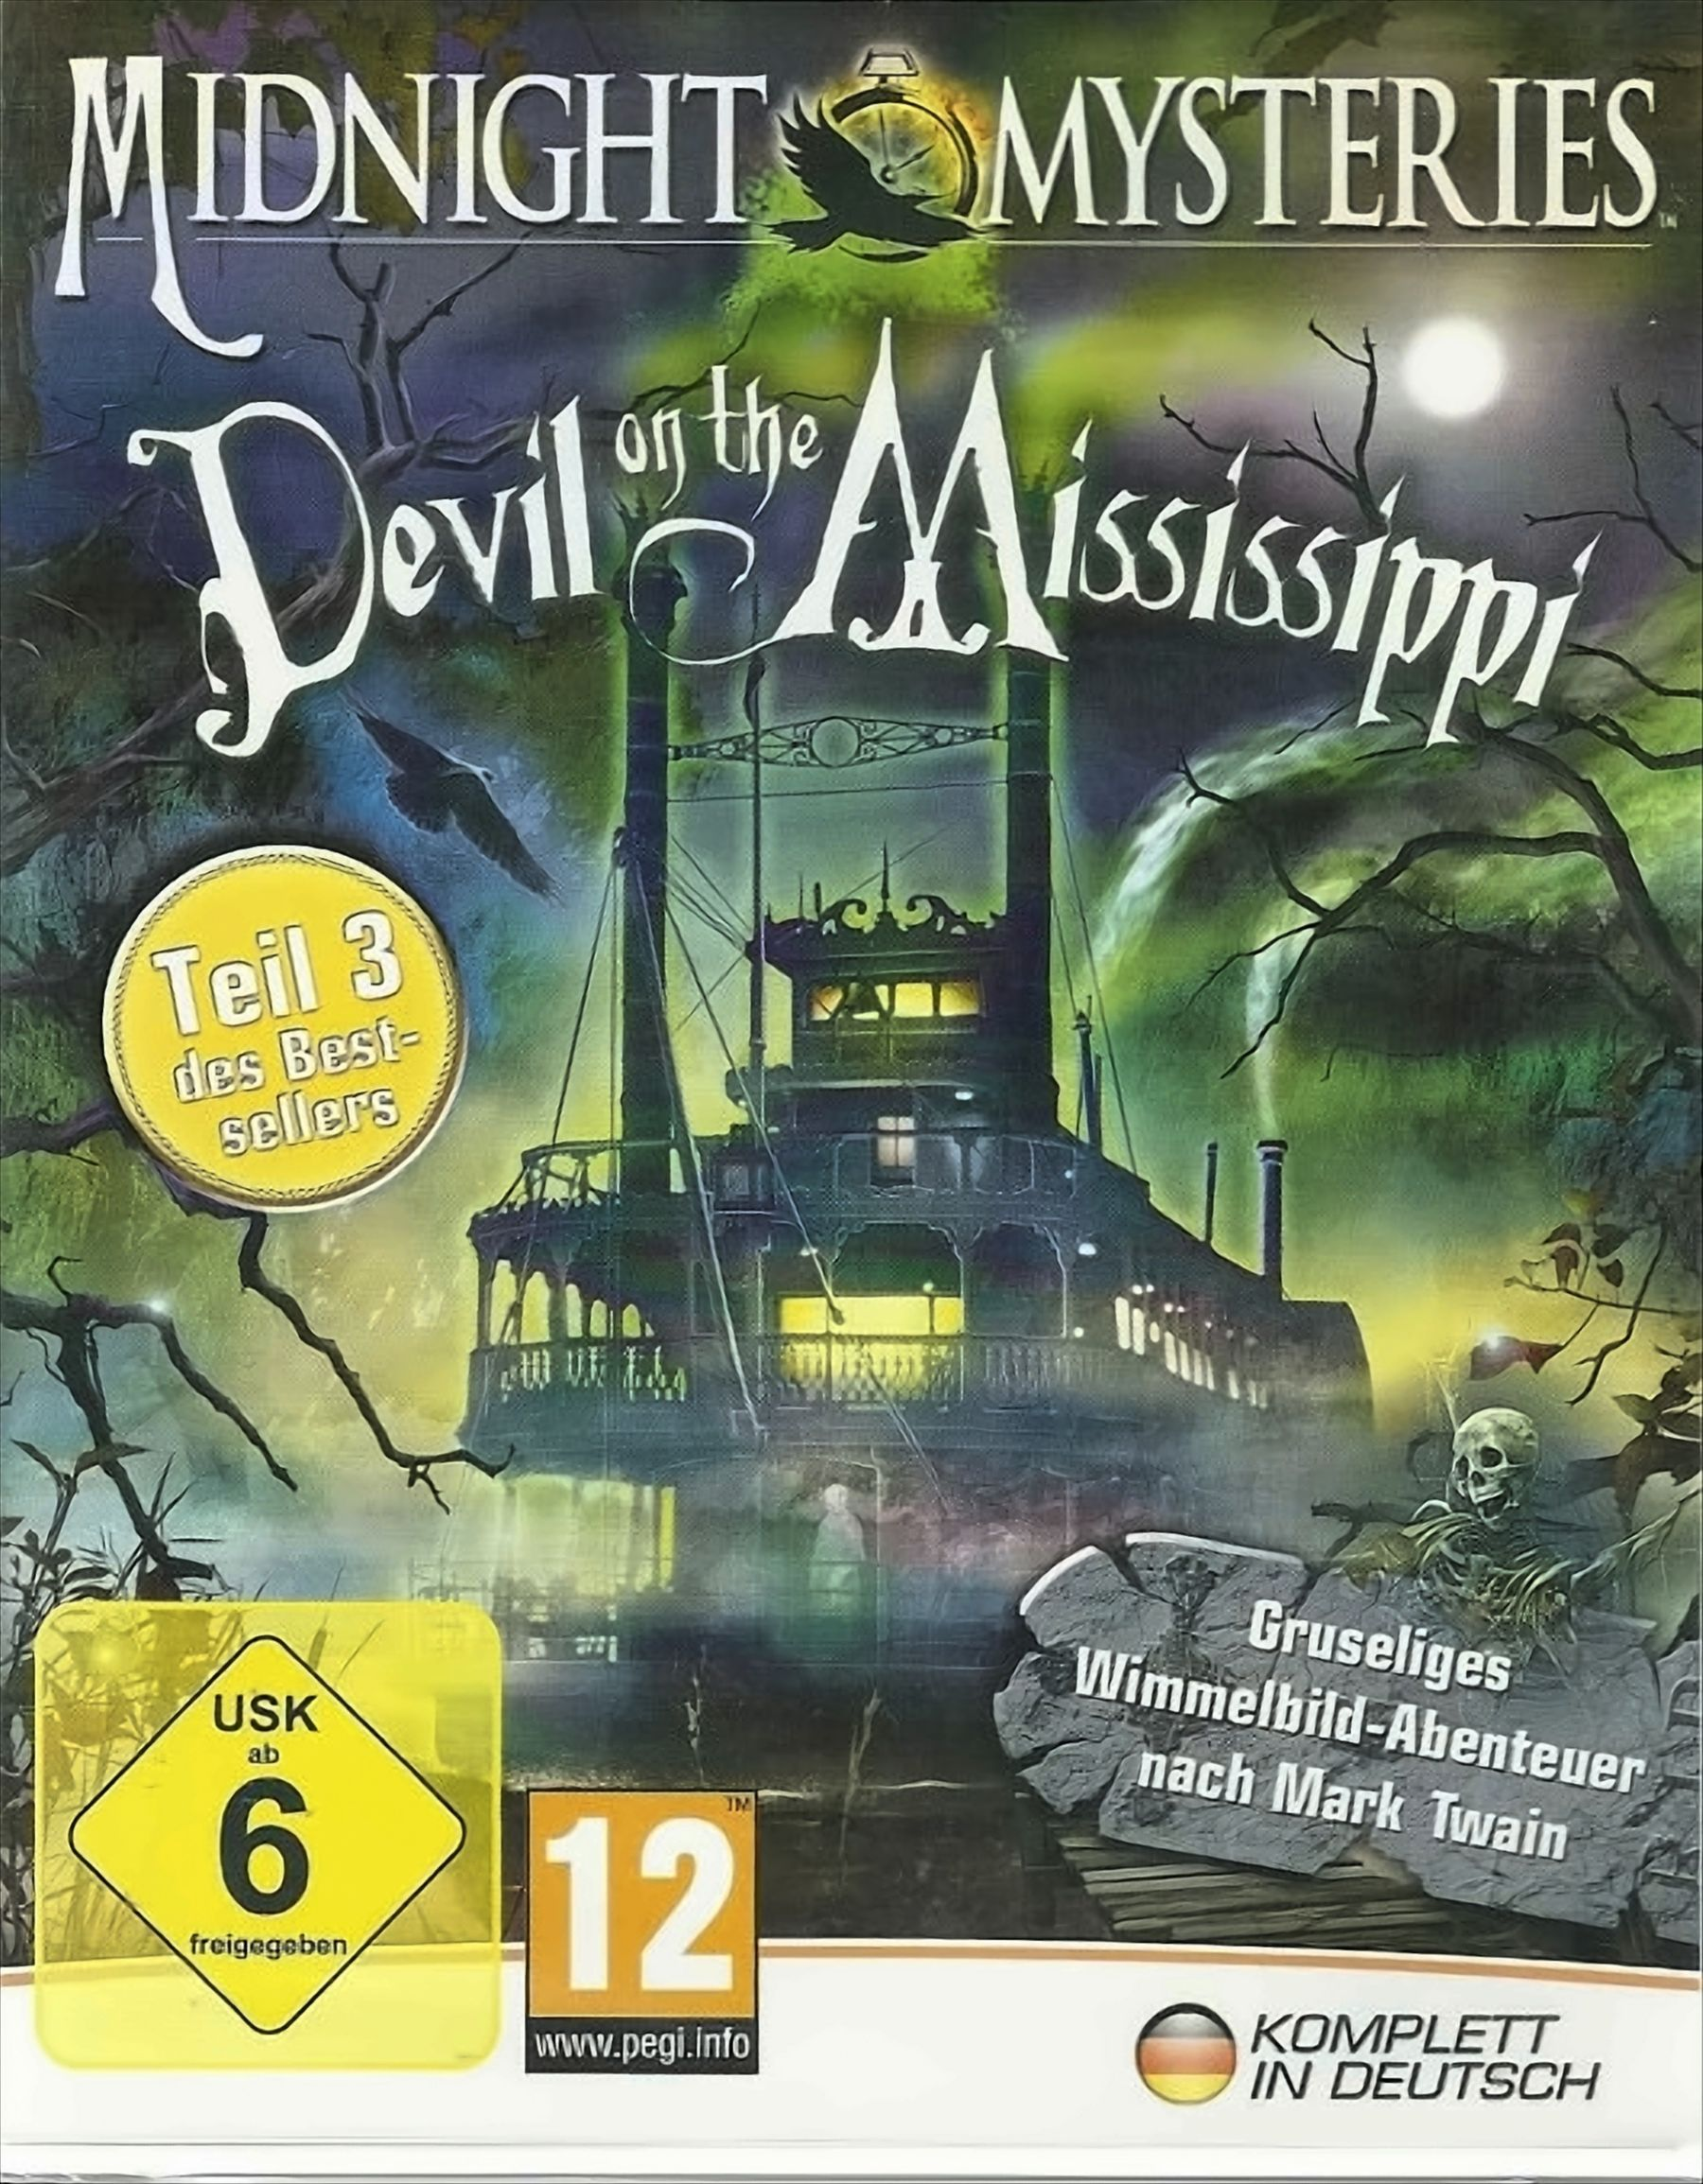 Mississippi - Mysteries: Devil [PC] On Midnight The